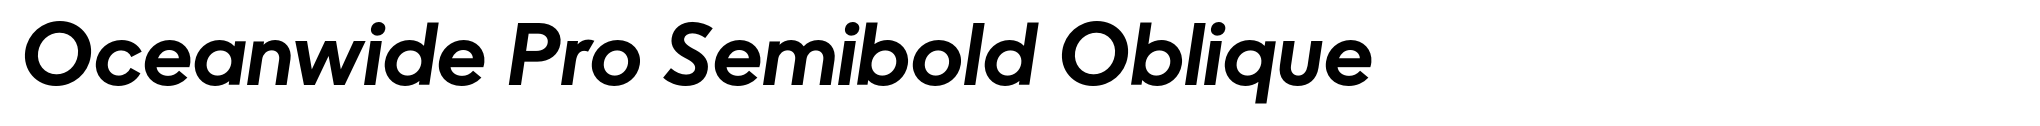 Oceanwide Pro Semibold Oblique image